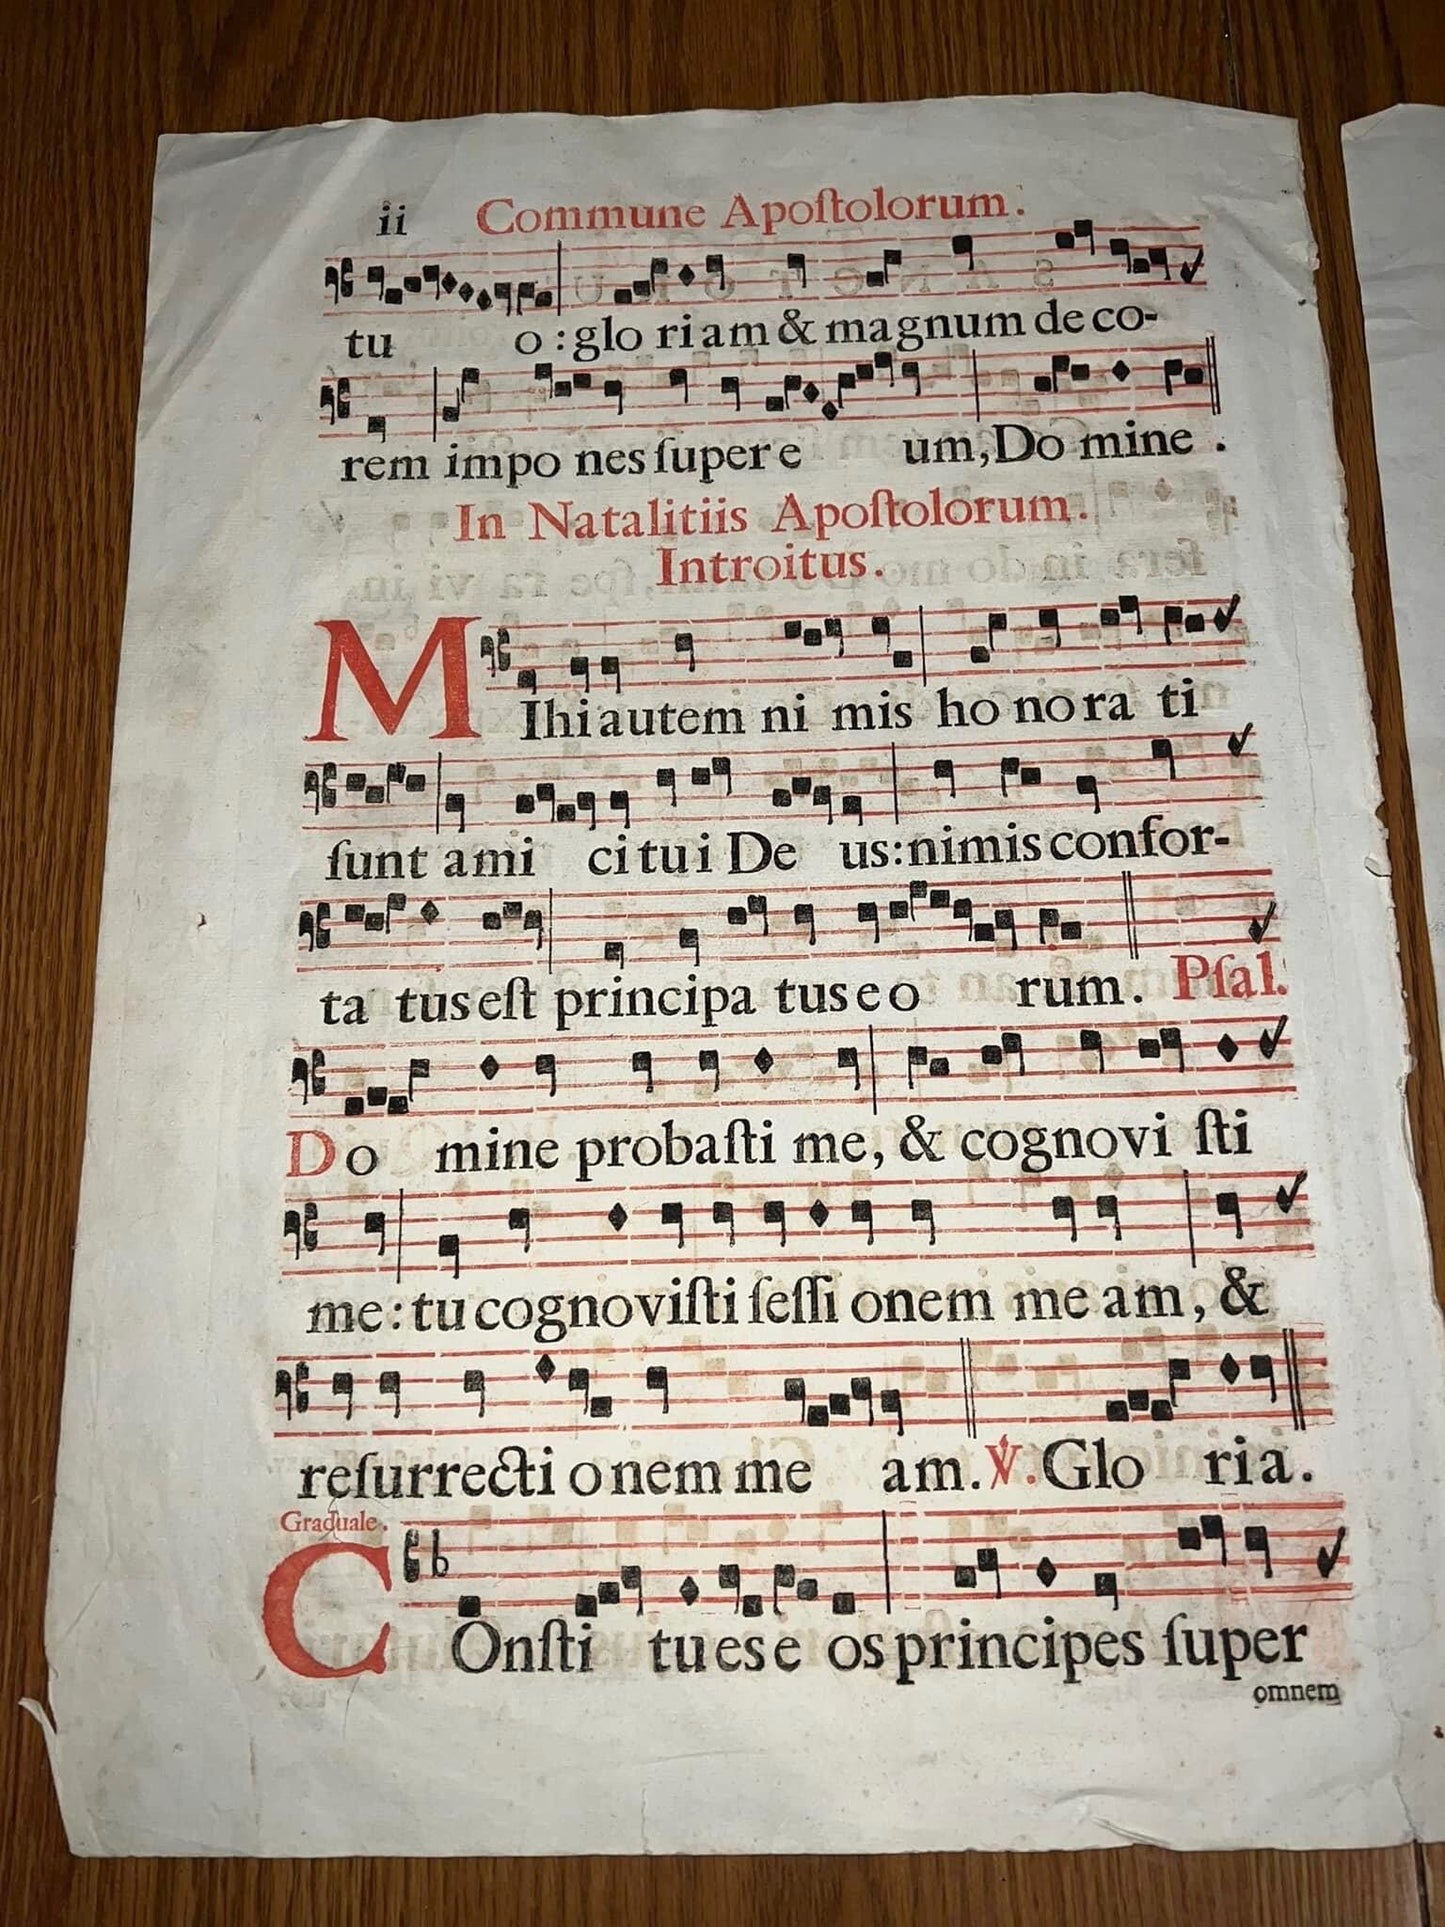 18th century antiphonal sheet music Religious in nature 1700s folio size